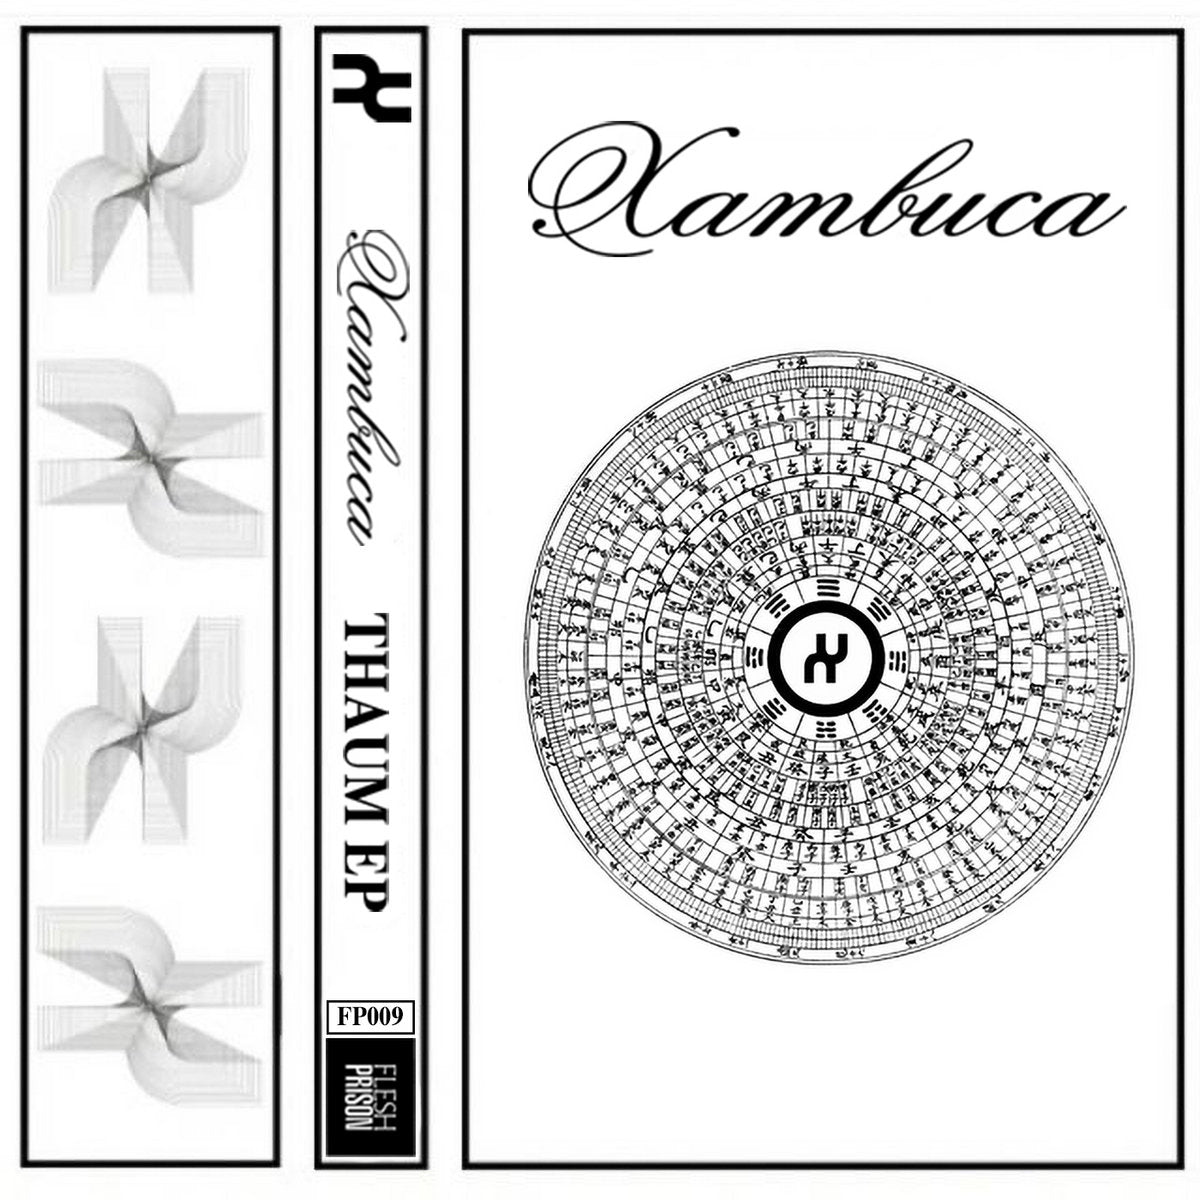 Xambuca - Thaum CS